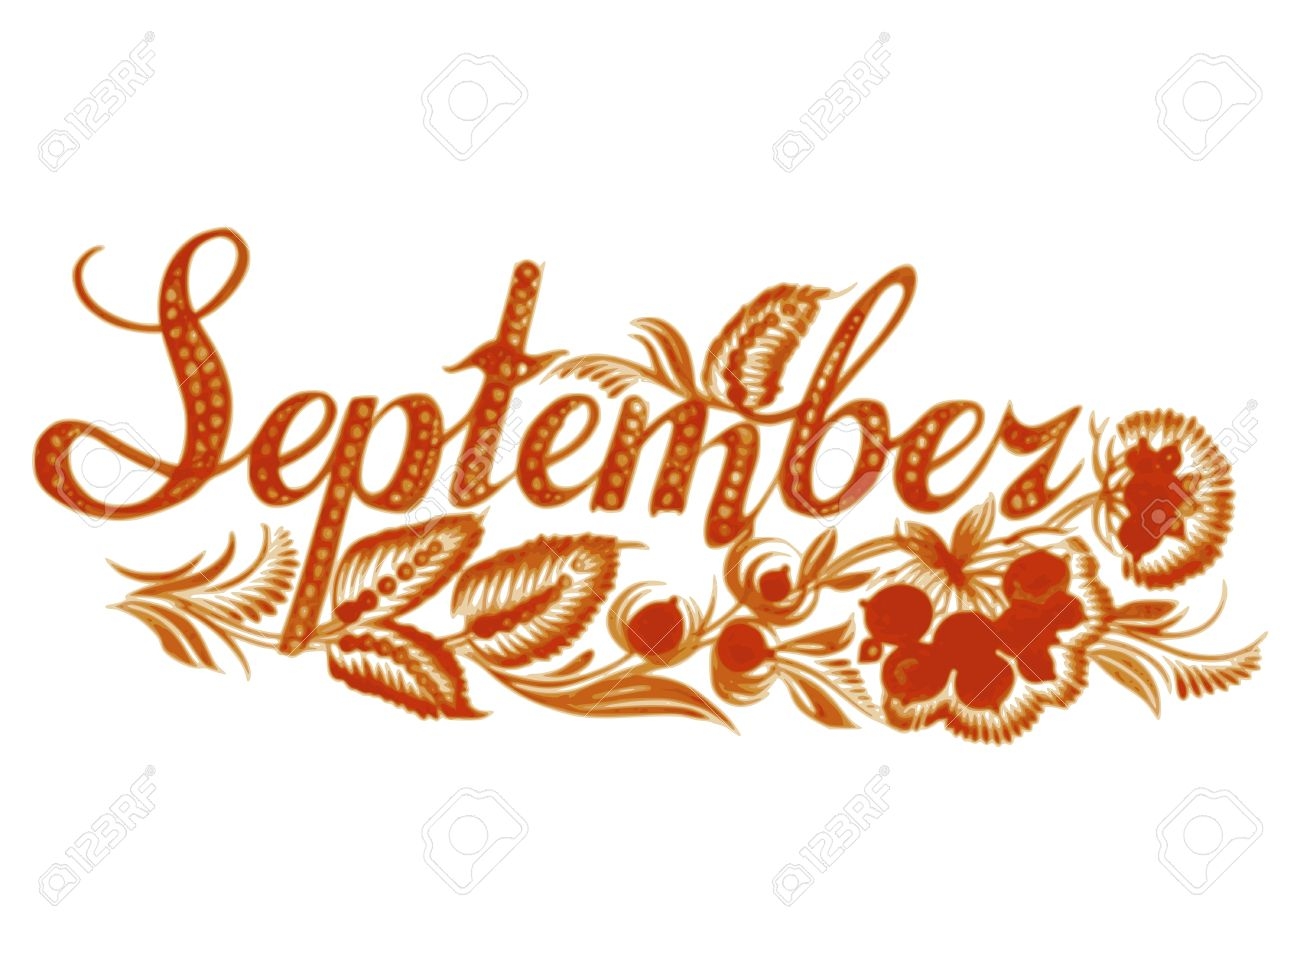 September Name Of The Month Hand Drawn Illustration In Ukrainian